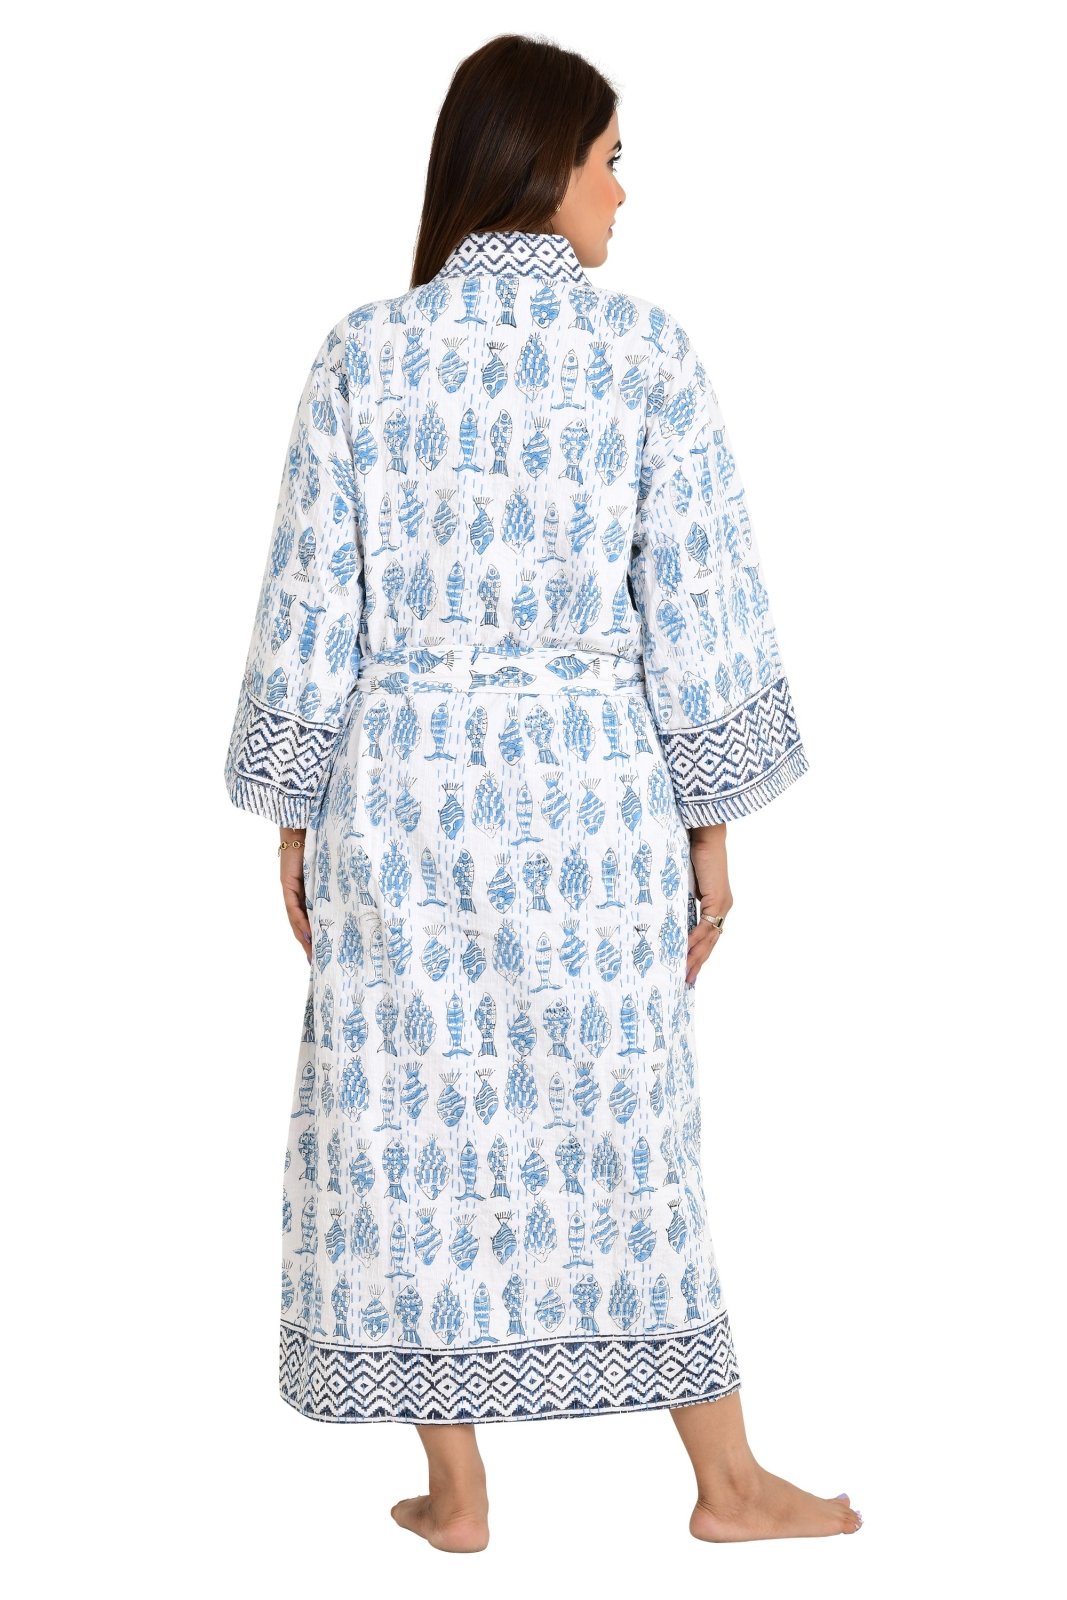 Kantha Stitch 100% Cotton Reversible Long Kimono Women Jacket | Handmade Stitch Robe | Unisex Gift | White Blue Fish Print - The Eastern Loom